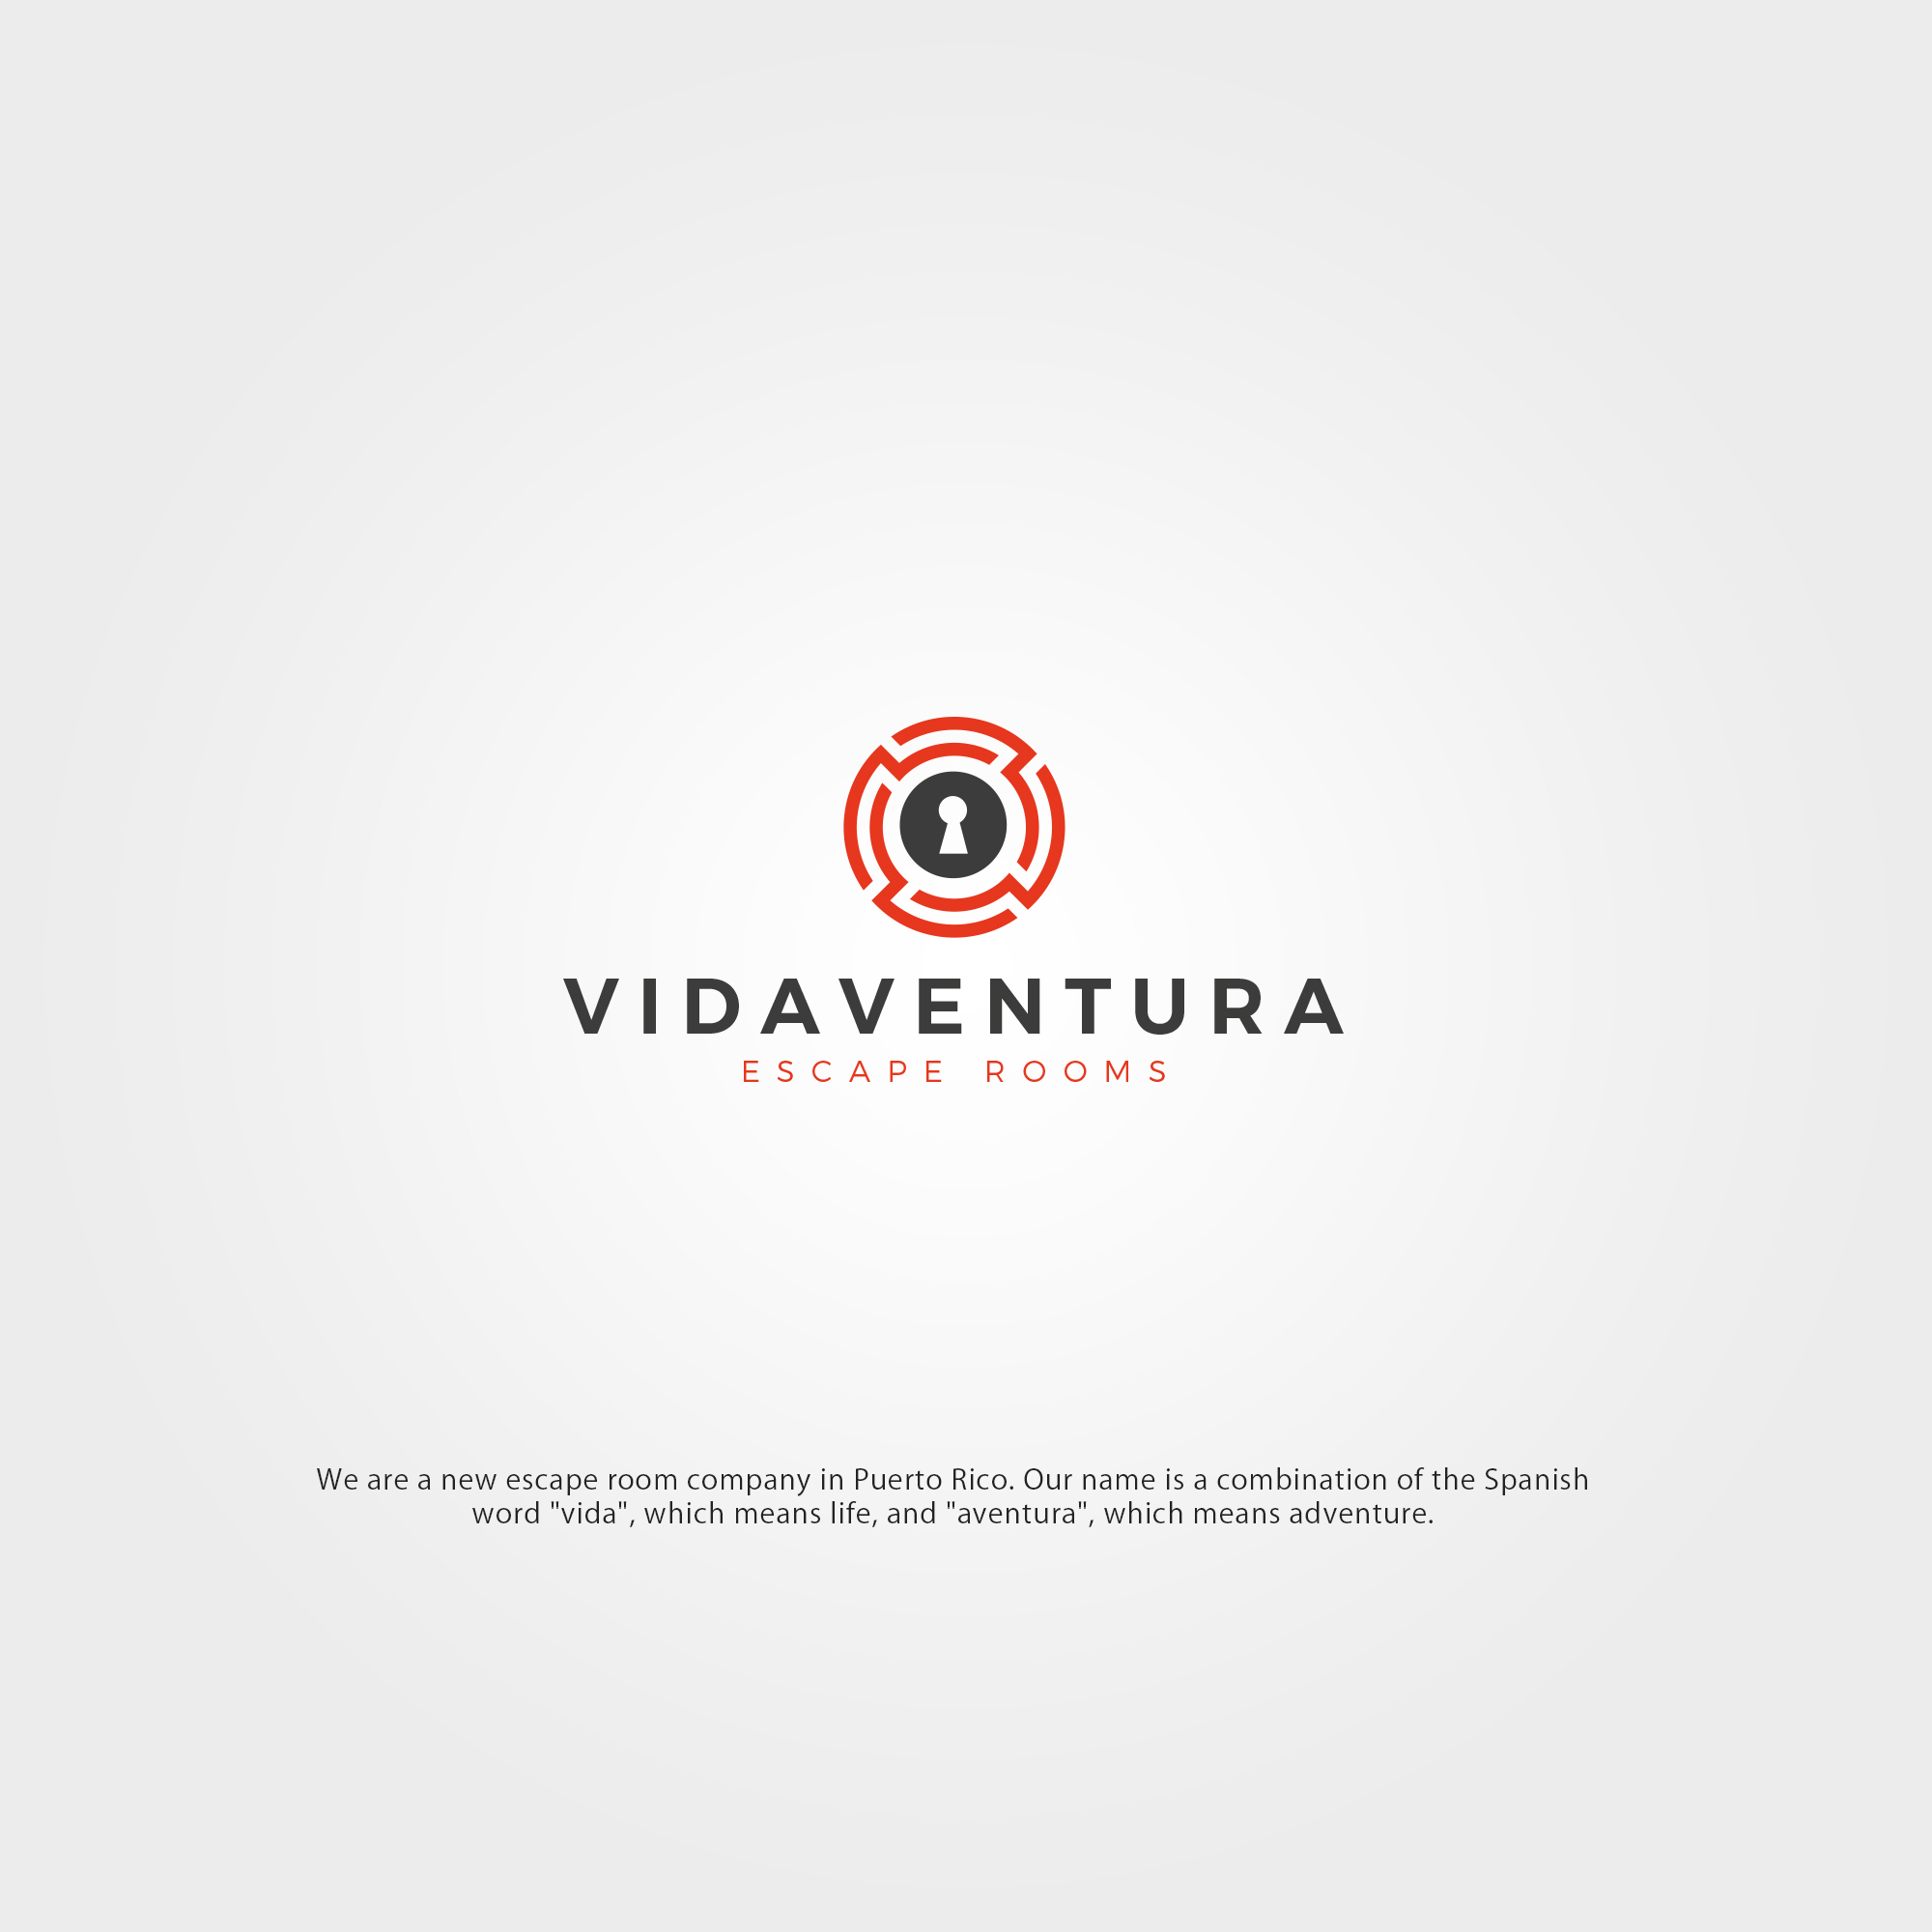 Logo Design entry 1705196 submitted by MartenVisser to the Logo Design for Vidaventura Escape Rooms run by montecristo73